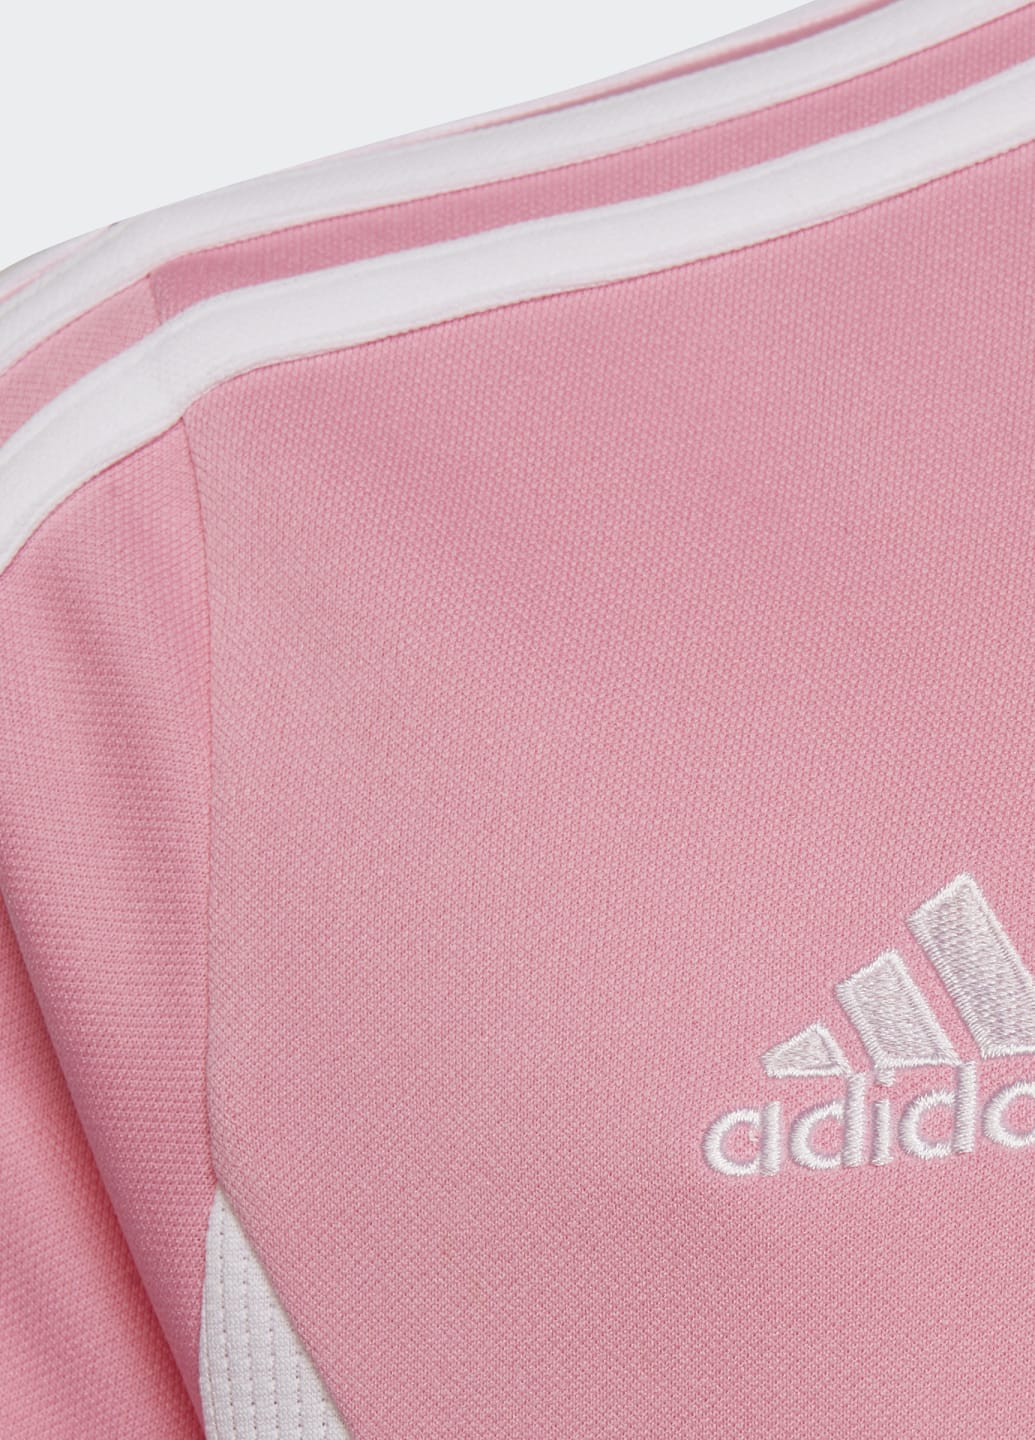 Розовая летняя куртка condivo 22 adidas